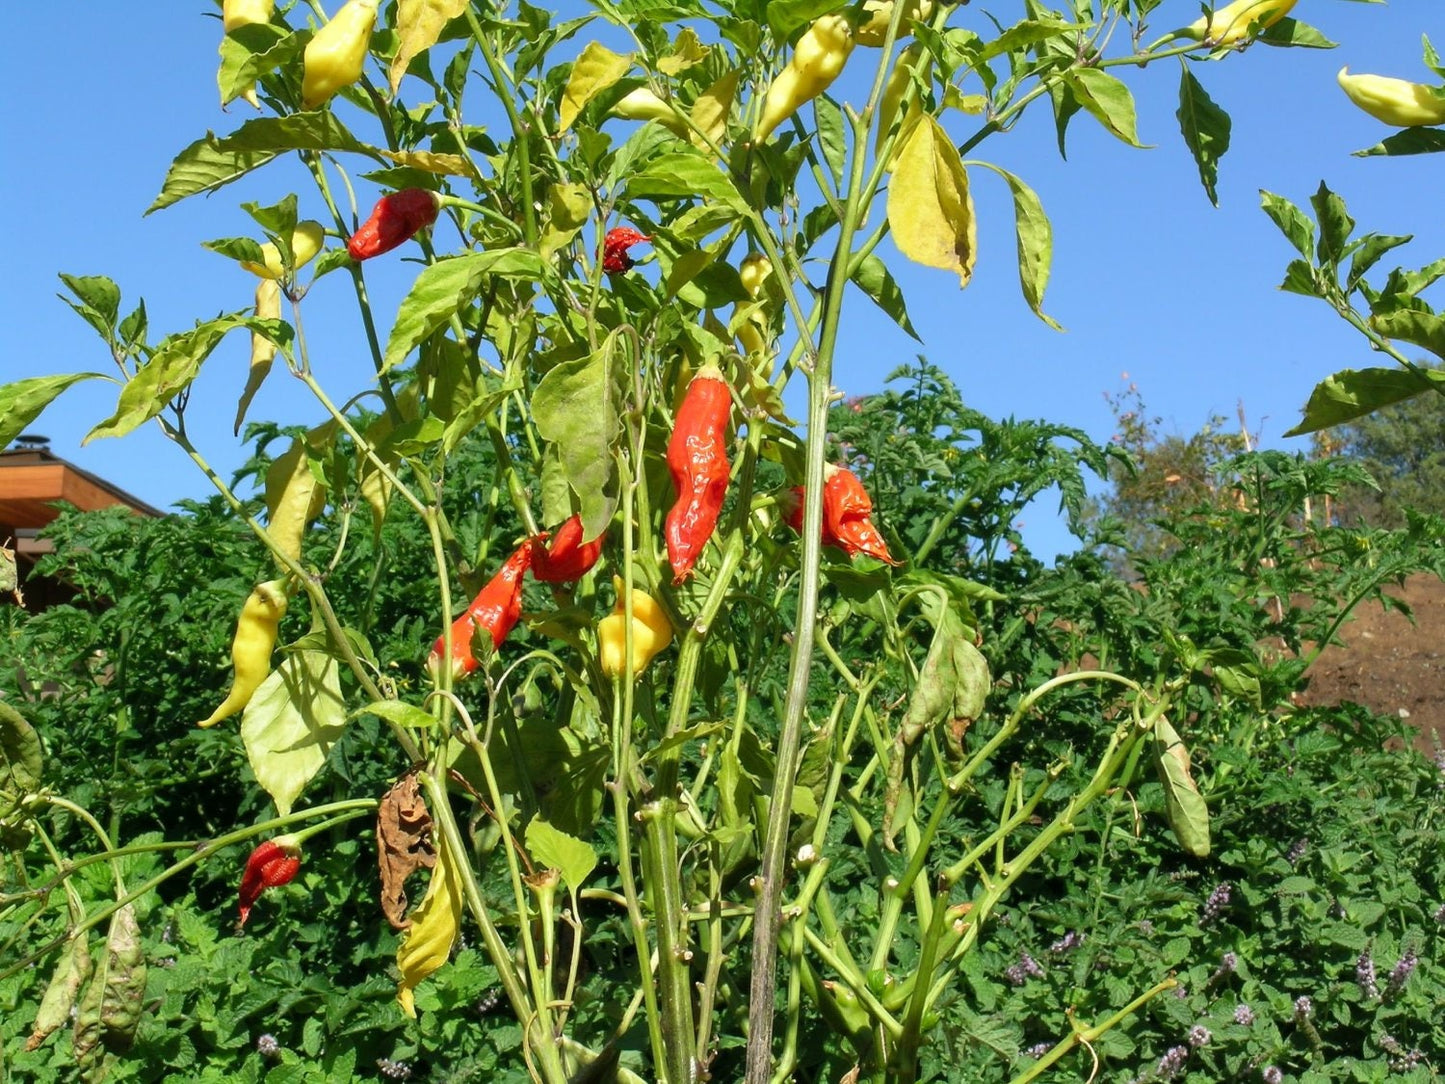 300 ANAHEIM CHILI PEPPER (New Mexico Chili Pepper) Capsicum Annuum Vegetable Seeds